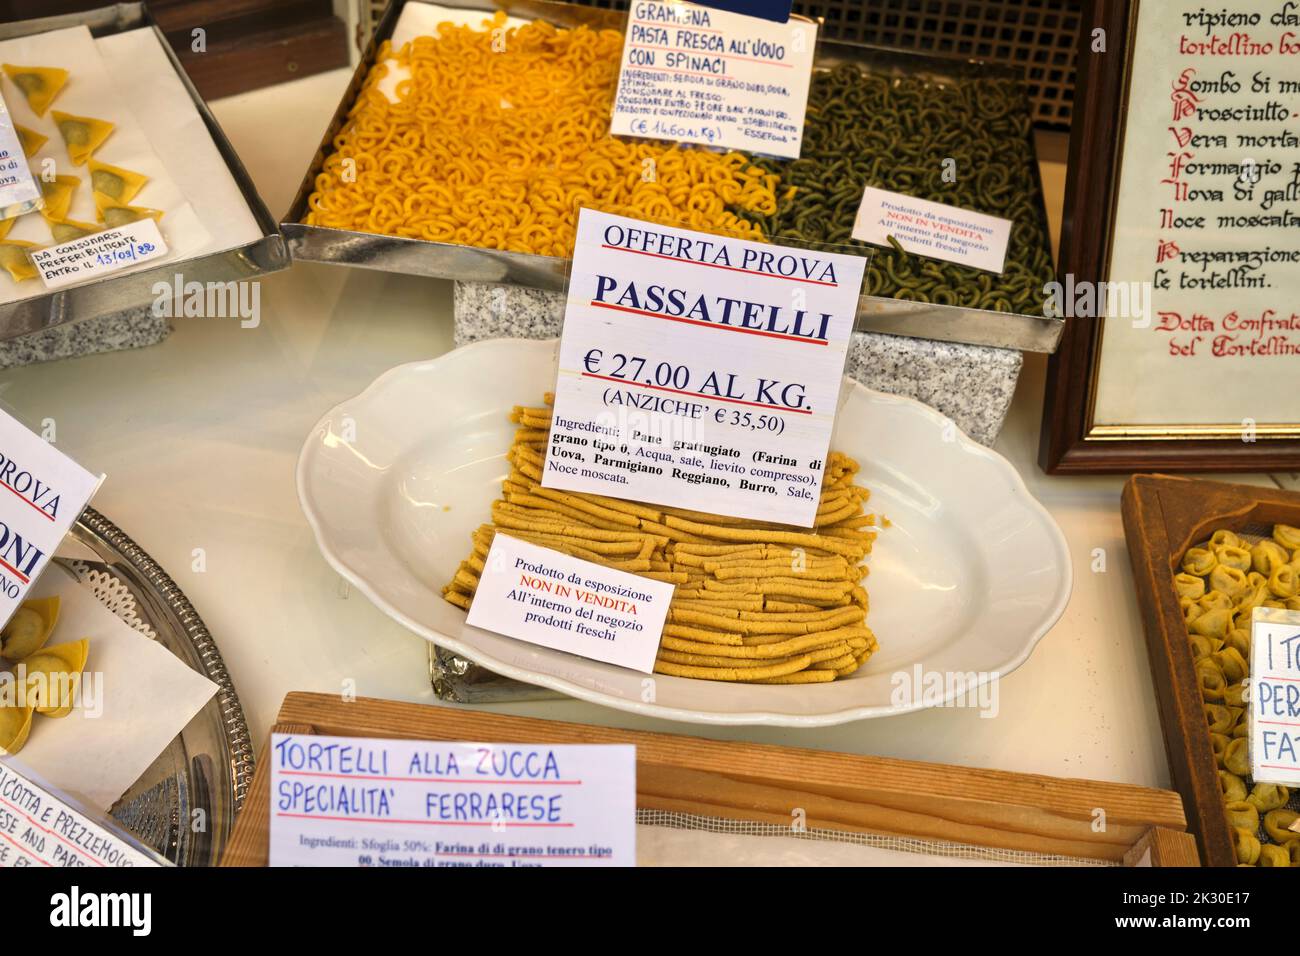 Passatelli Pasta on display in shop window inBologna Italy Stock Photo